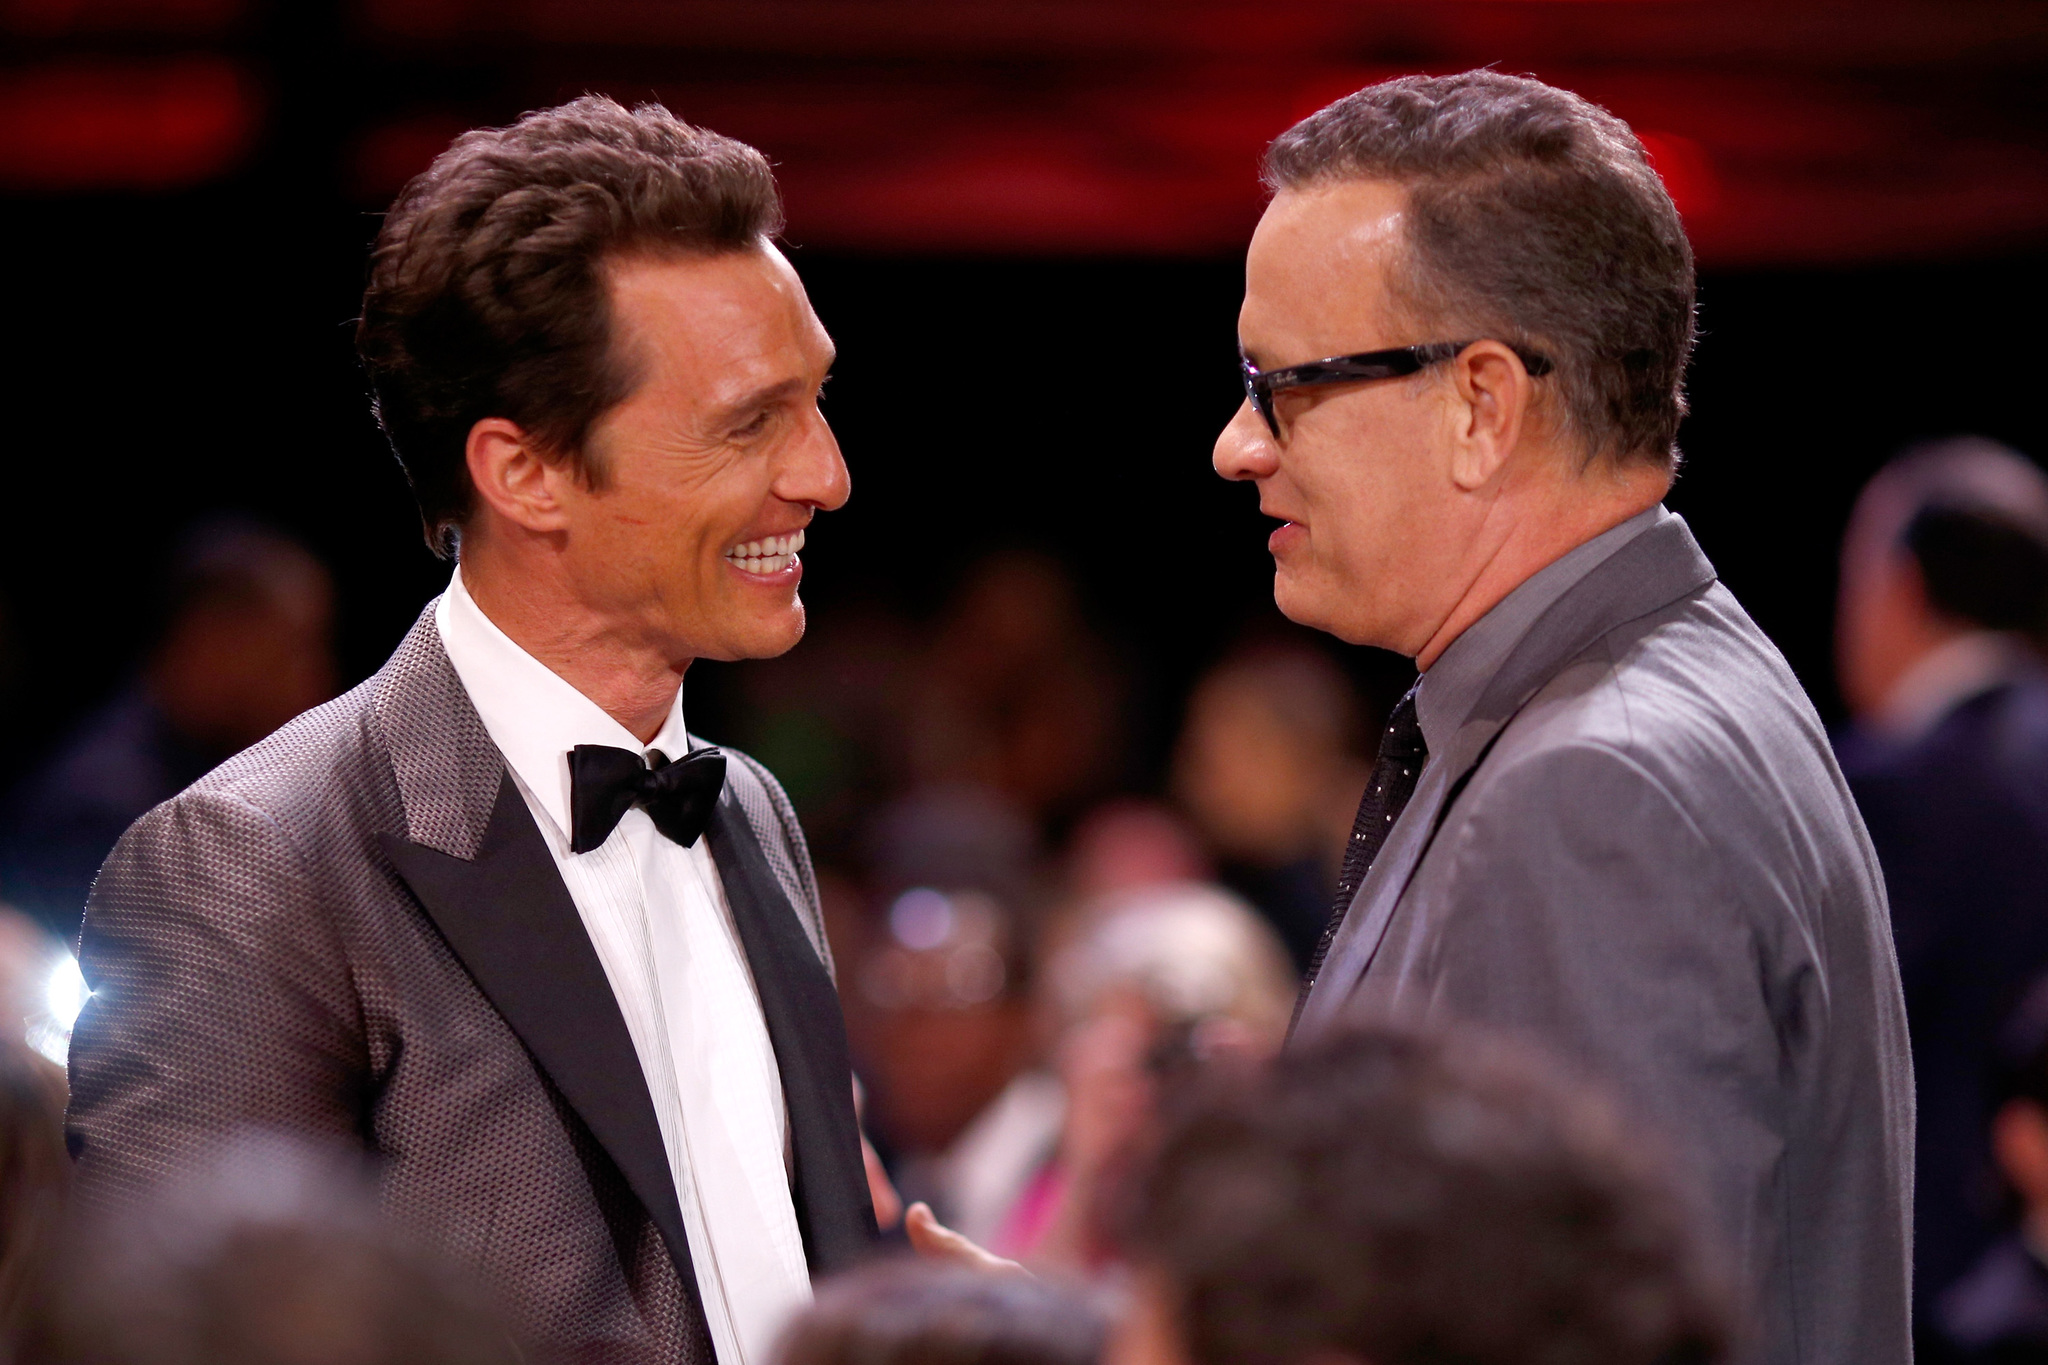 Tom Hanks and Matthew McConaughey